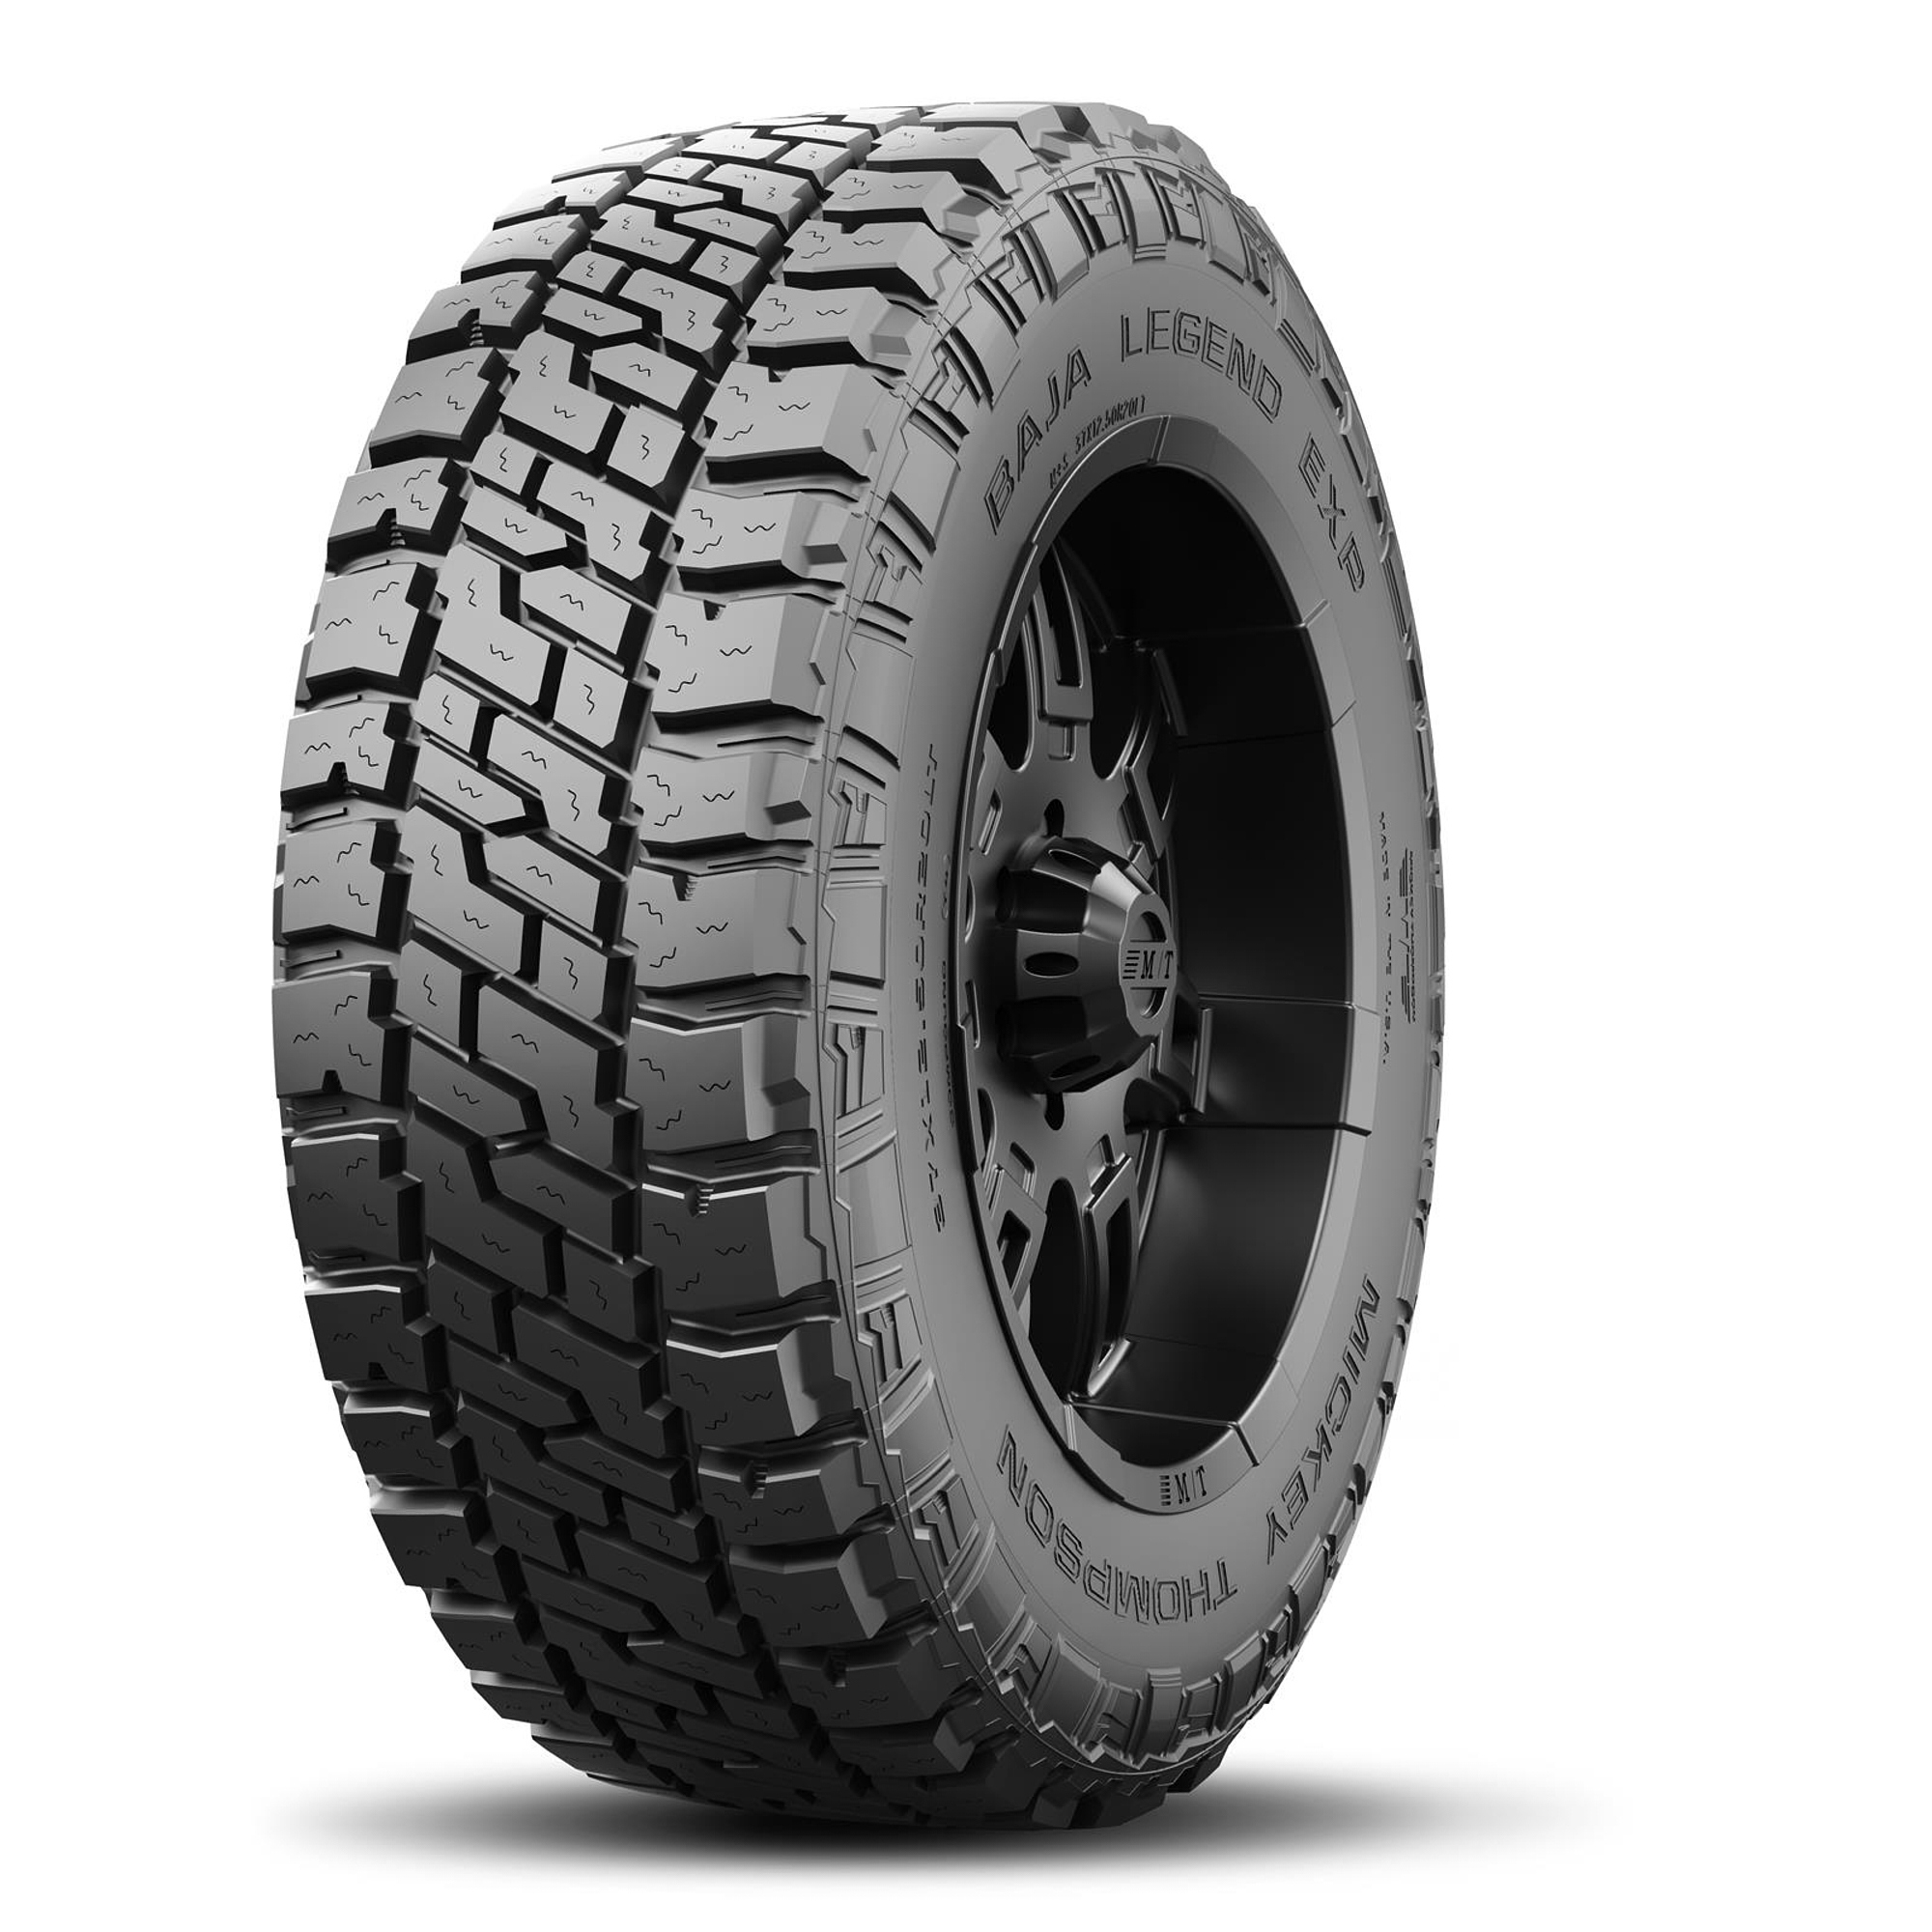 Baja Legend EXP Tire LT265/65R17 120/117Q - 247531